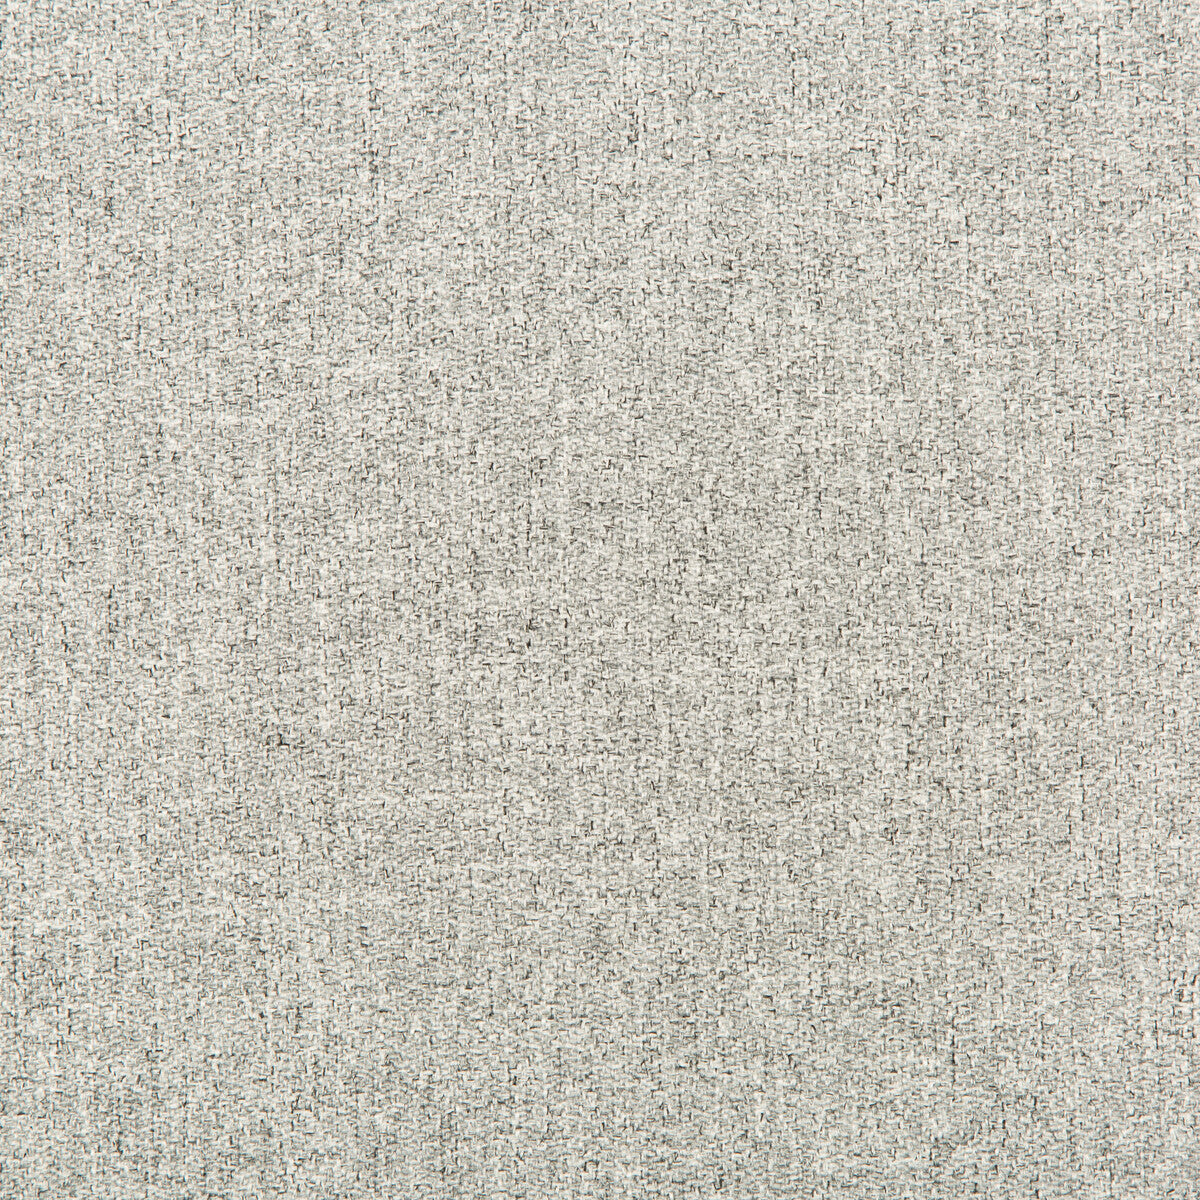 Tweedford fabric in grey color - pattern 35346.11.0 - by Kravet Basics